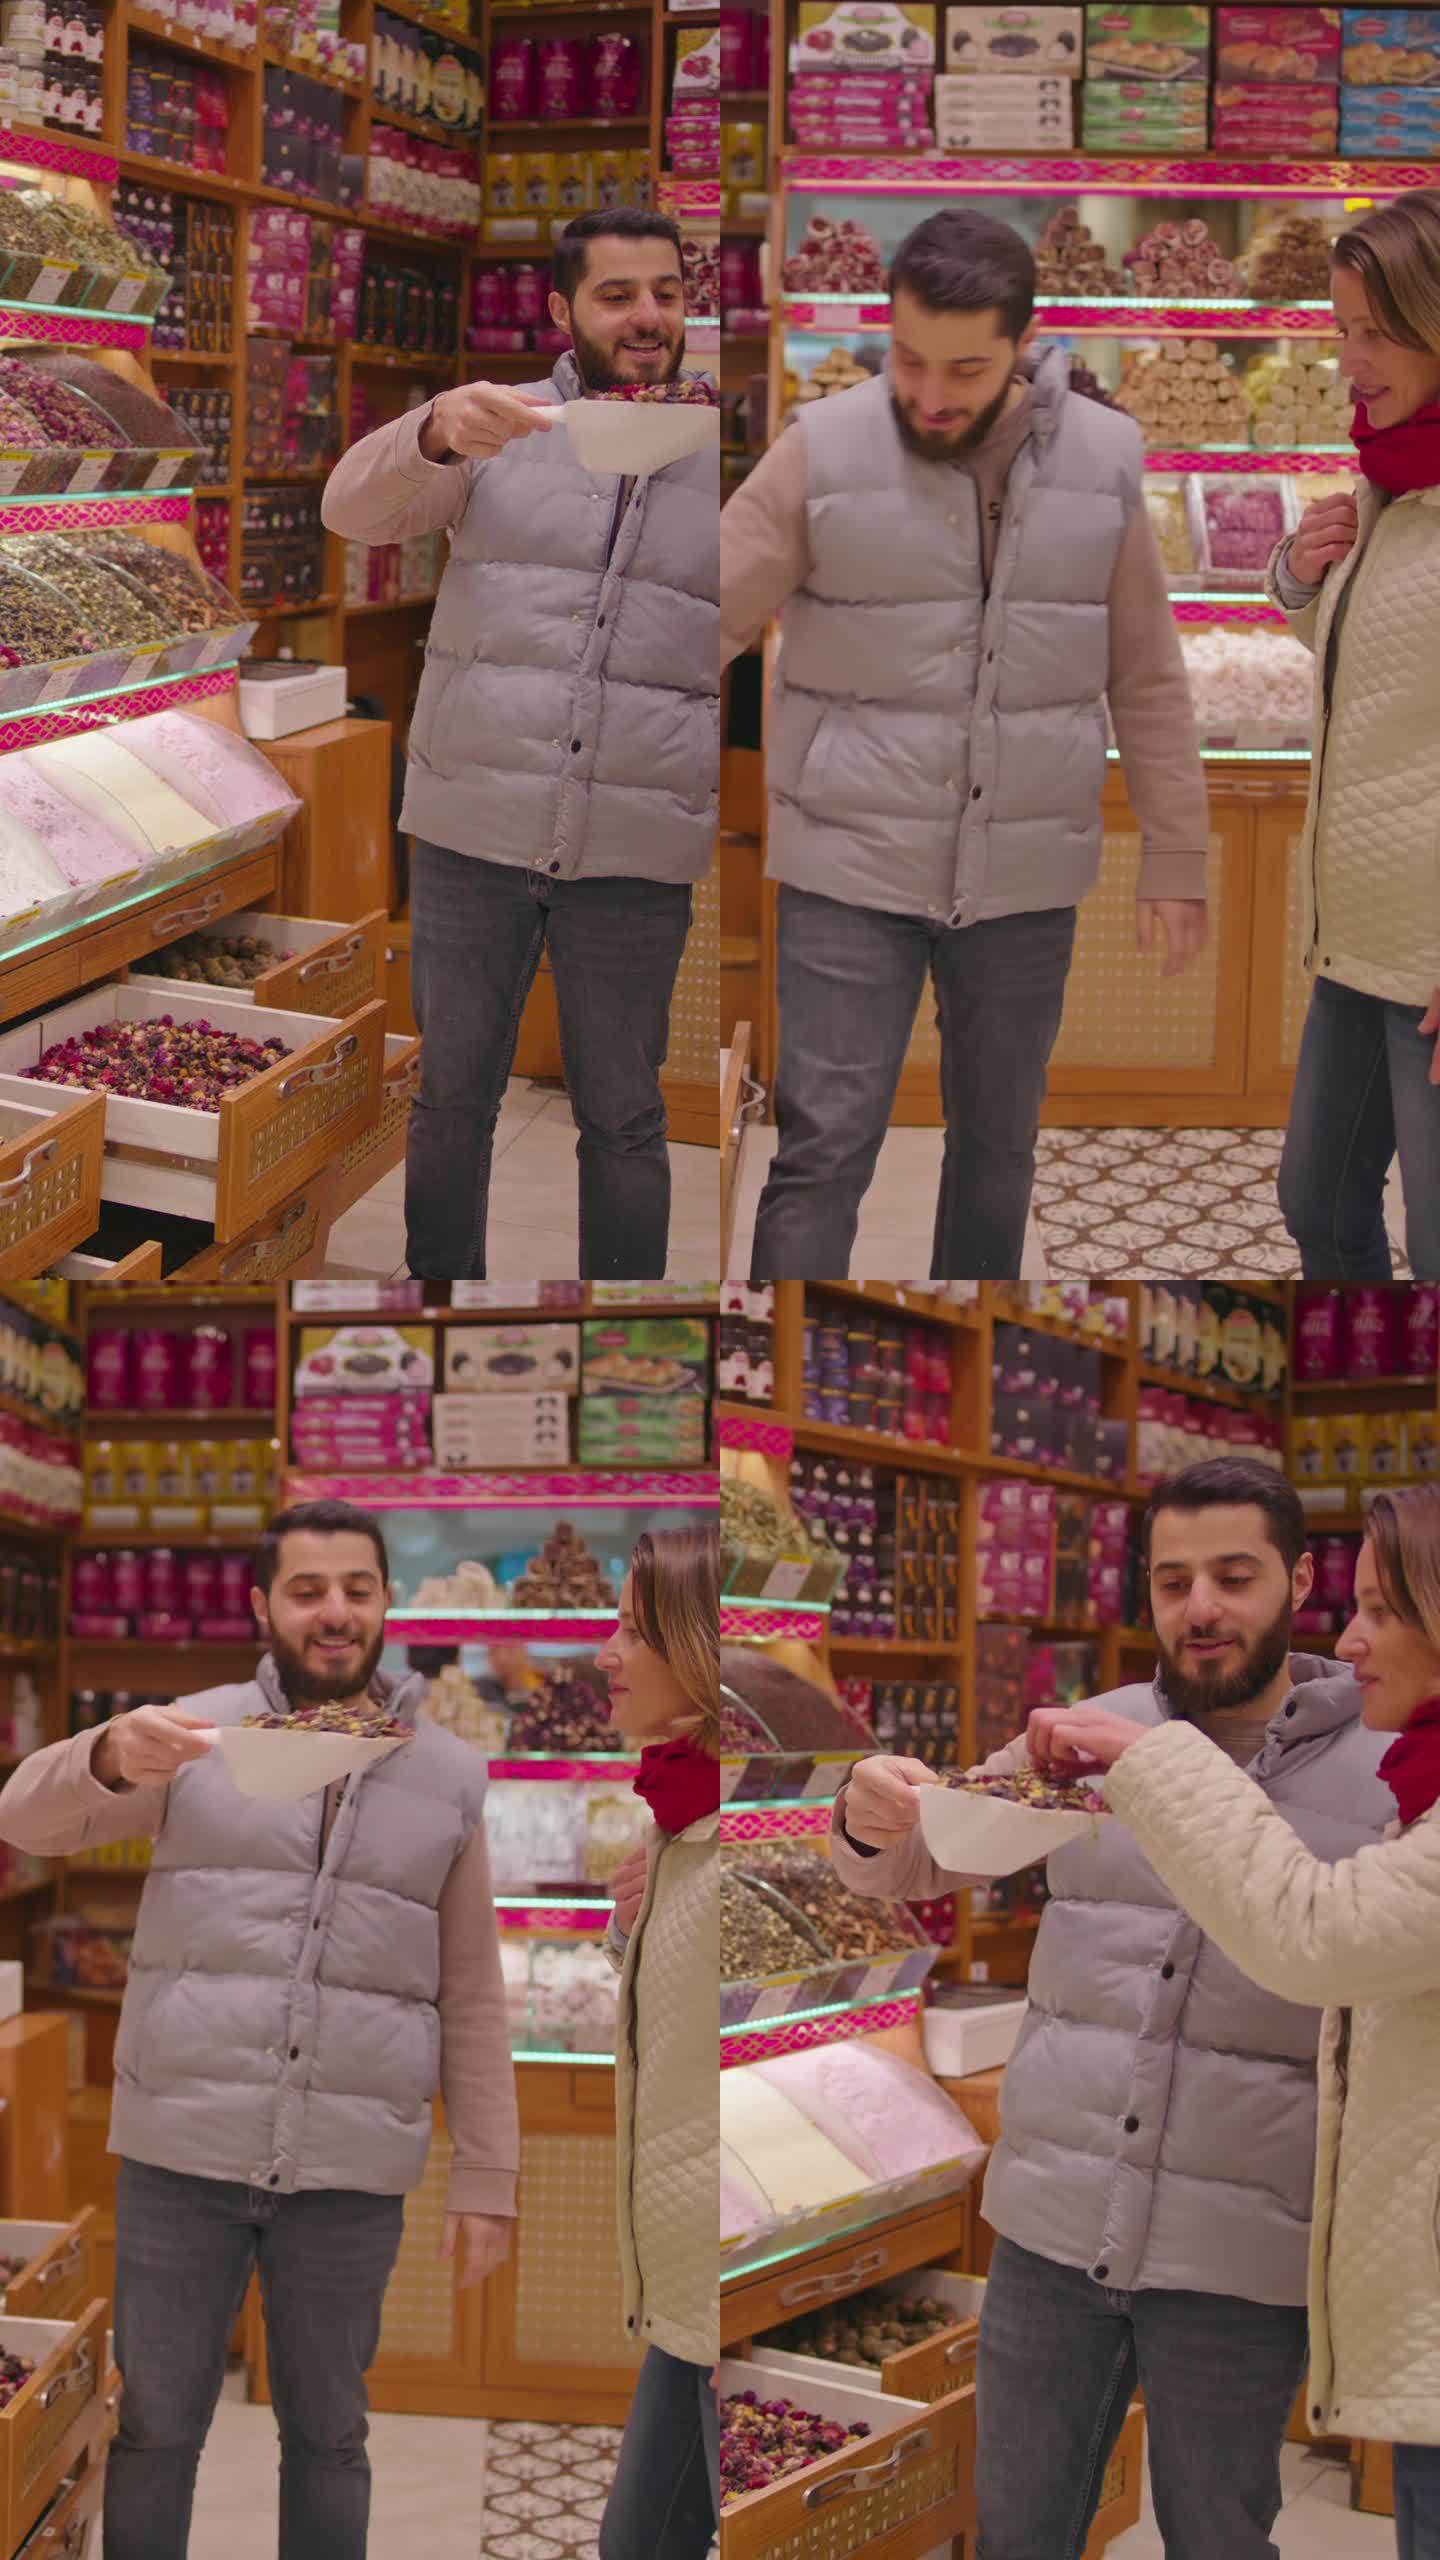 SLO MO香料展销会:土耳其小贩向高兴的女顾客介绍香料的芳香味道#SpiceMarketDisco